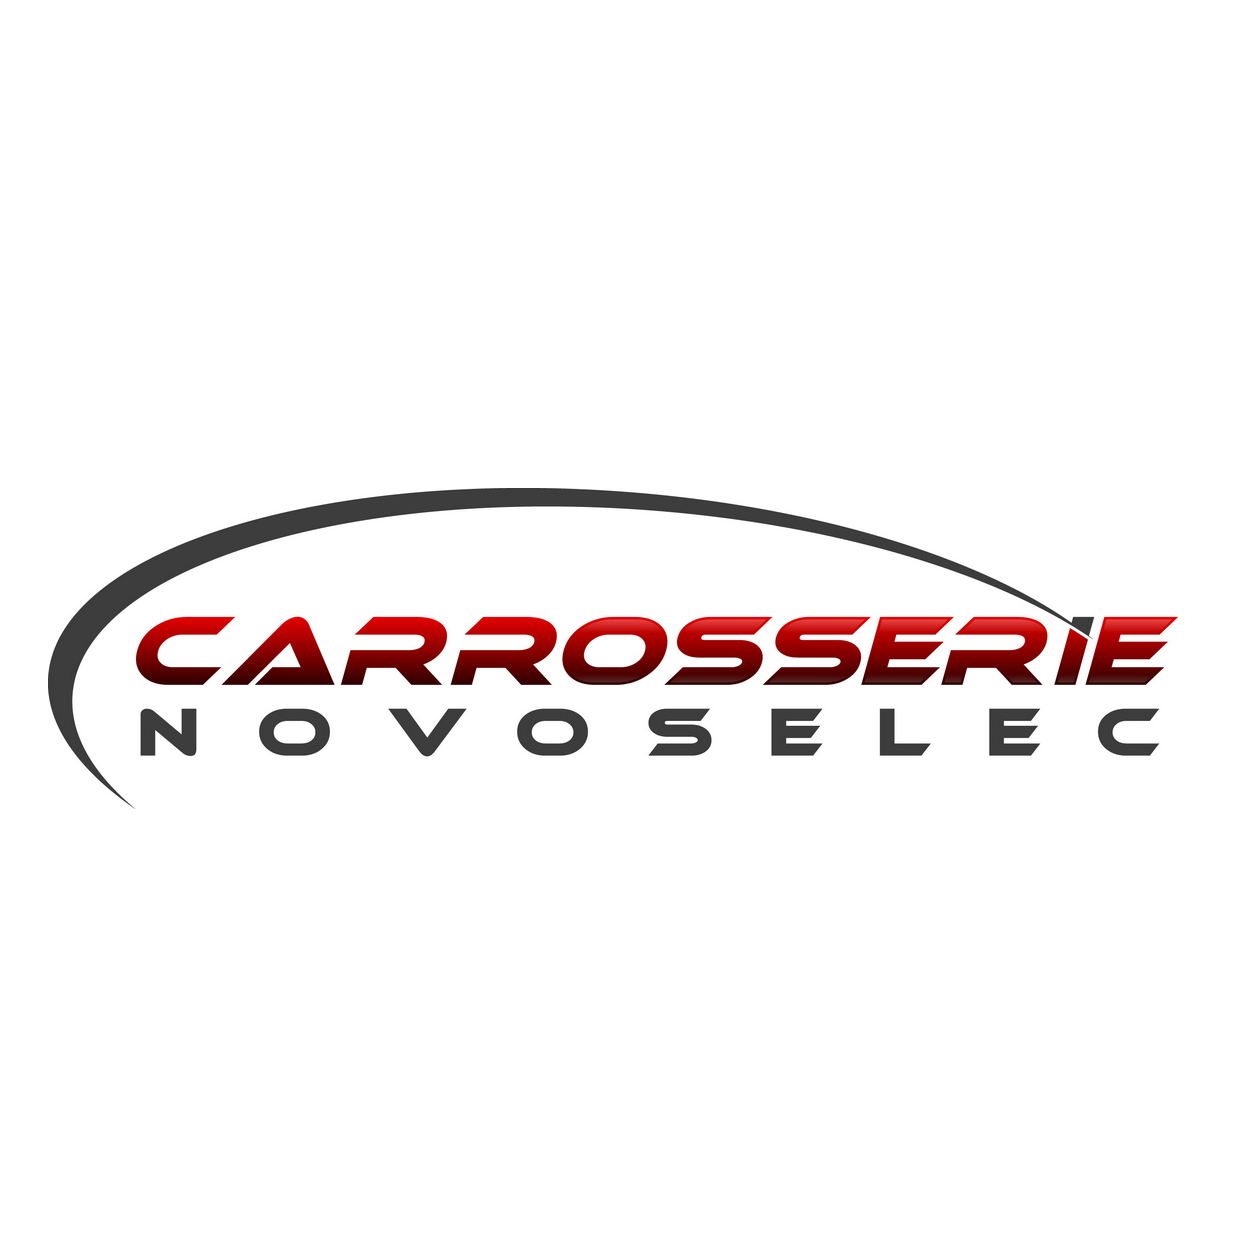 Carrosserie Novoselec Logo